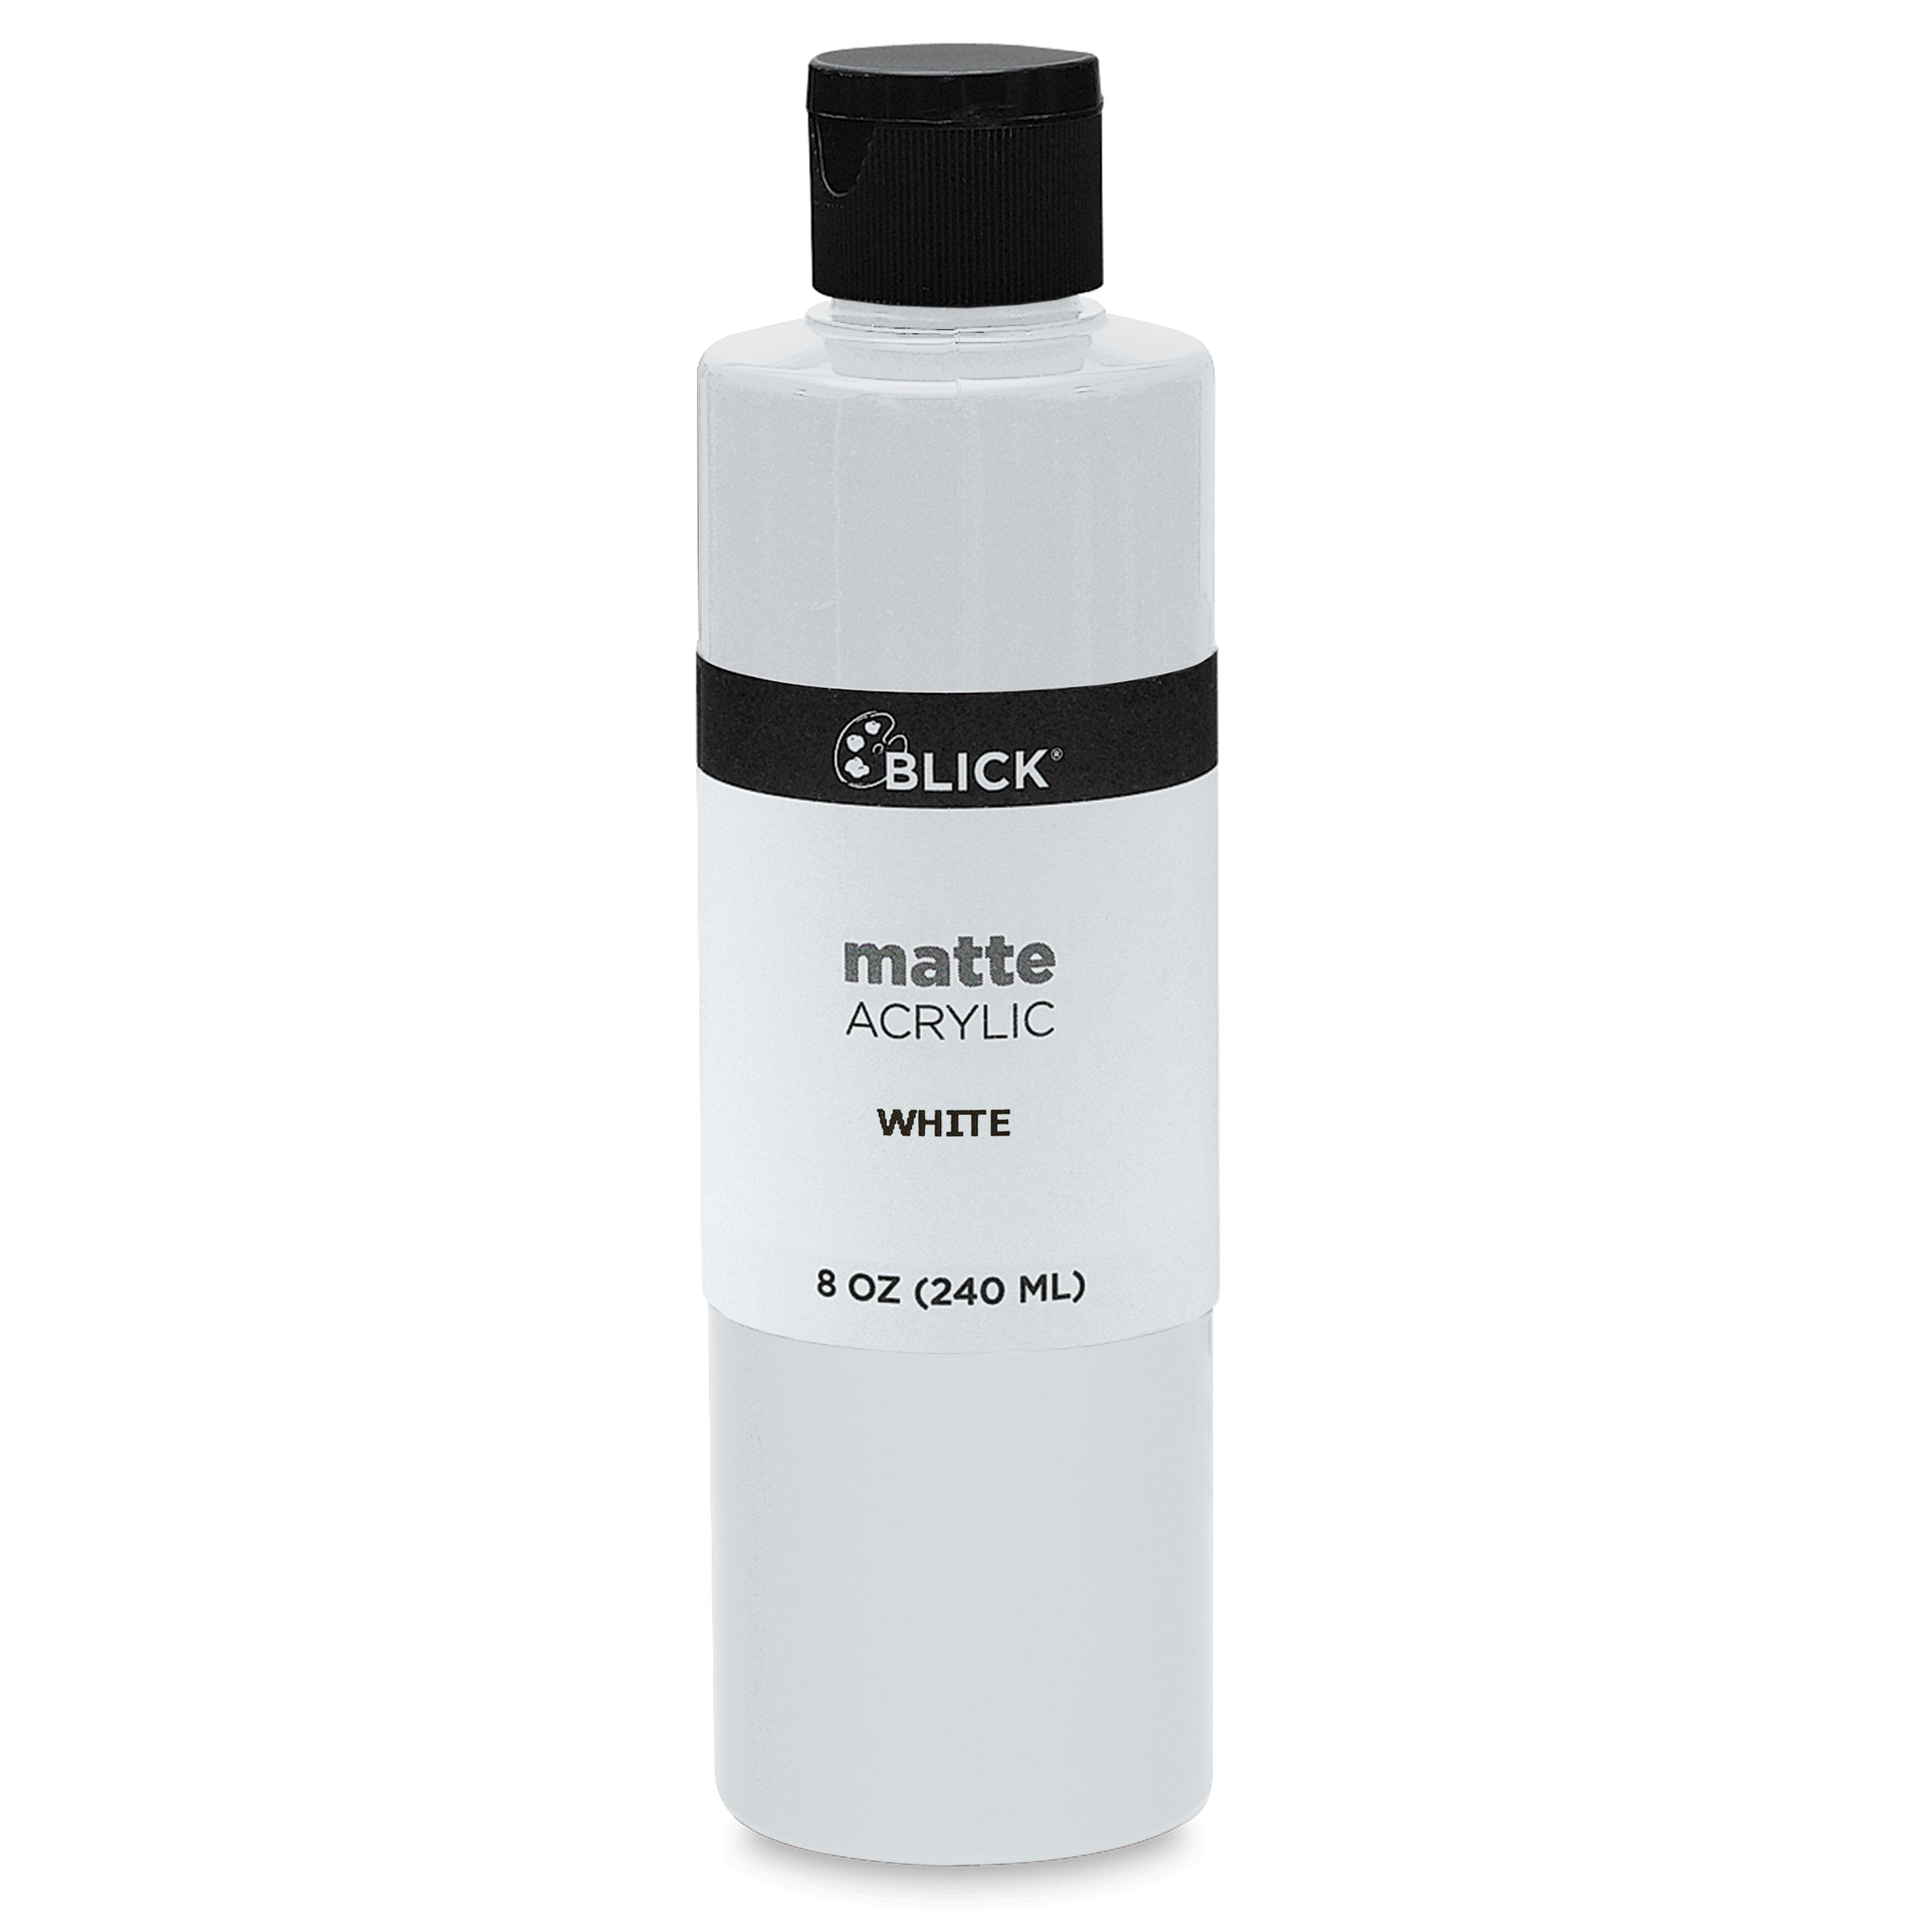 Blick Matte Acrylic - Brown, 2 oz bottle